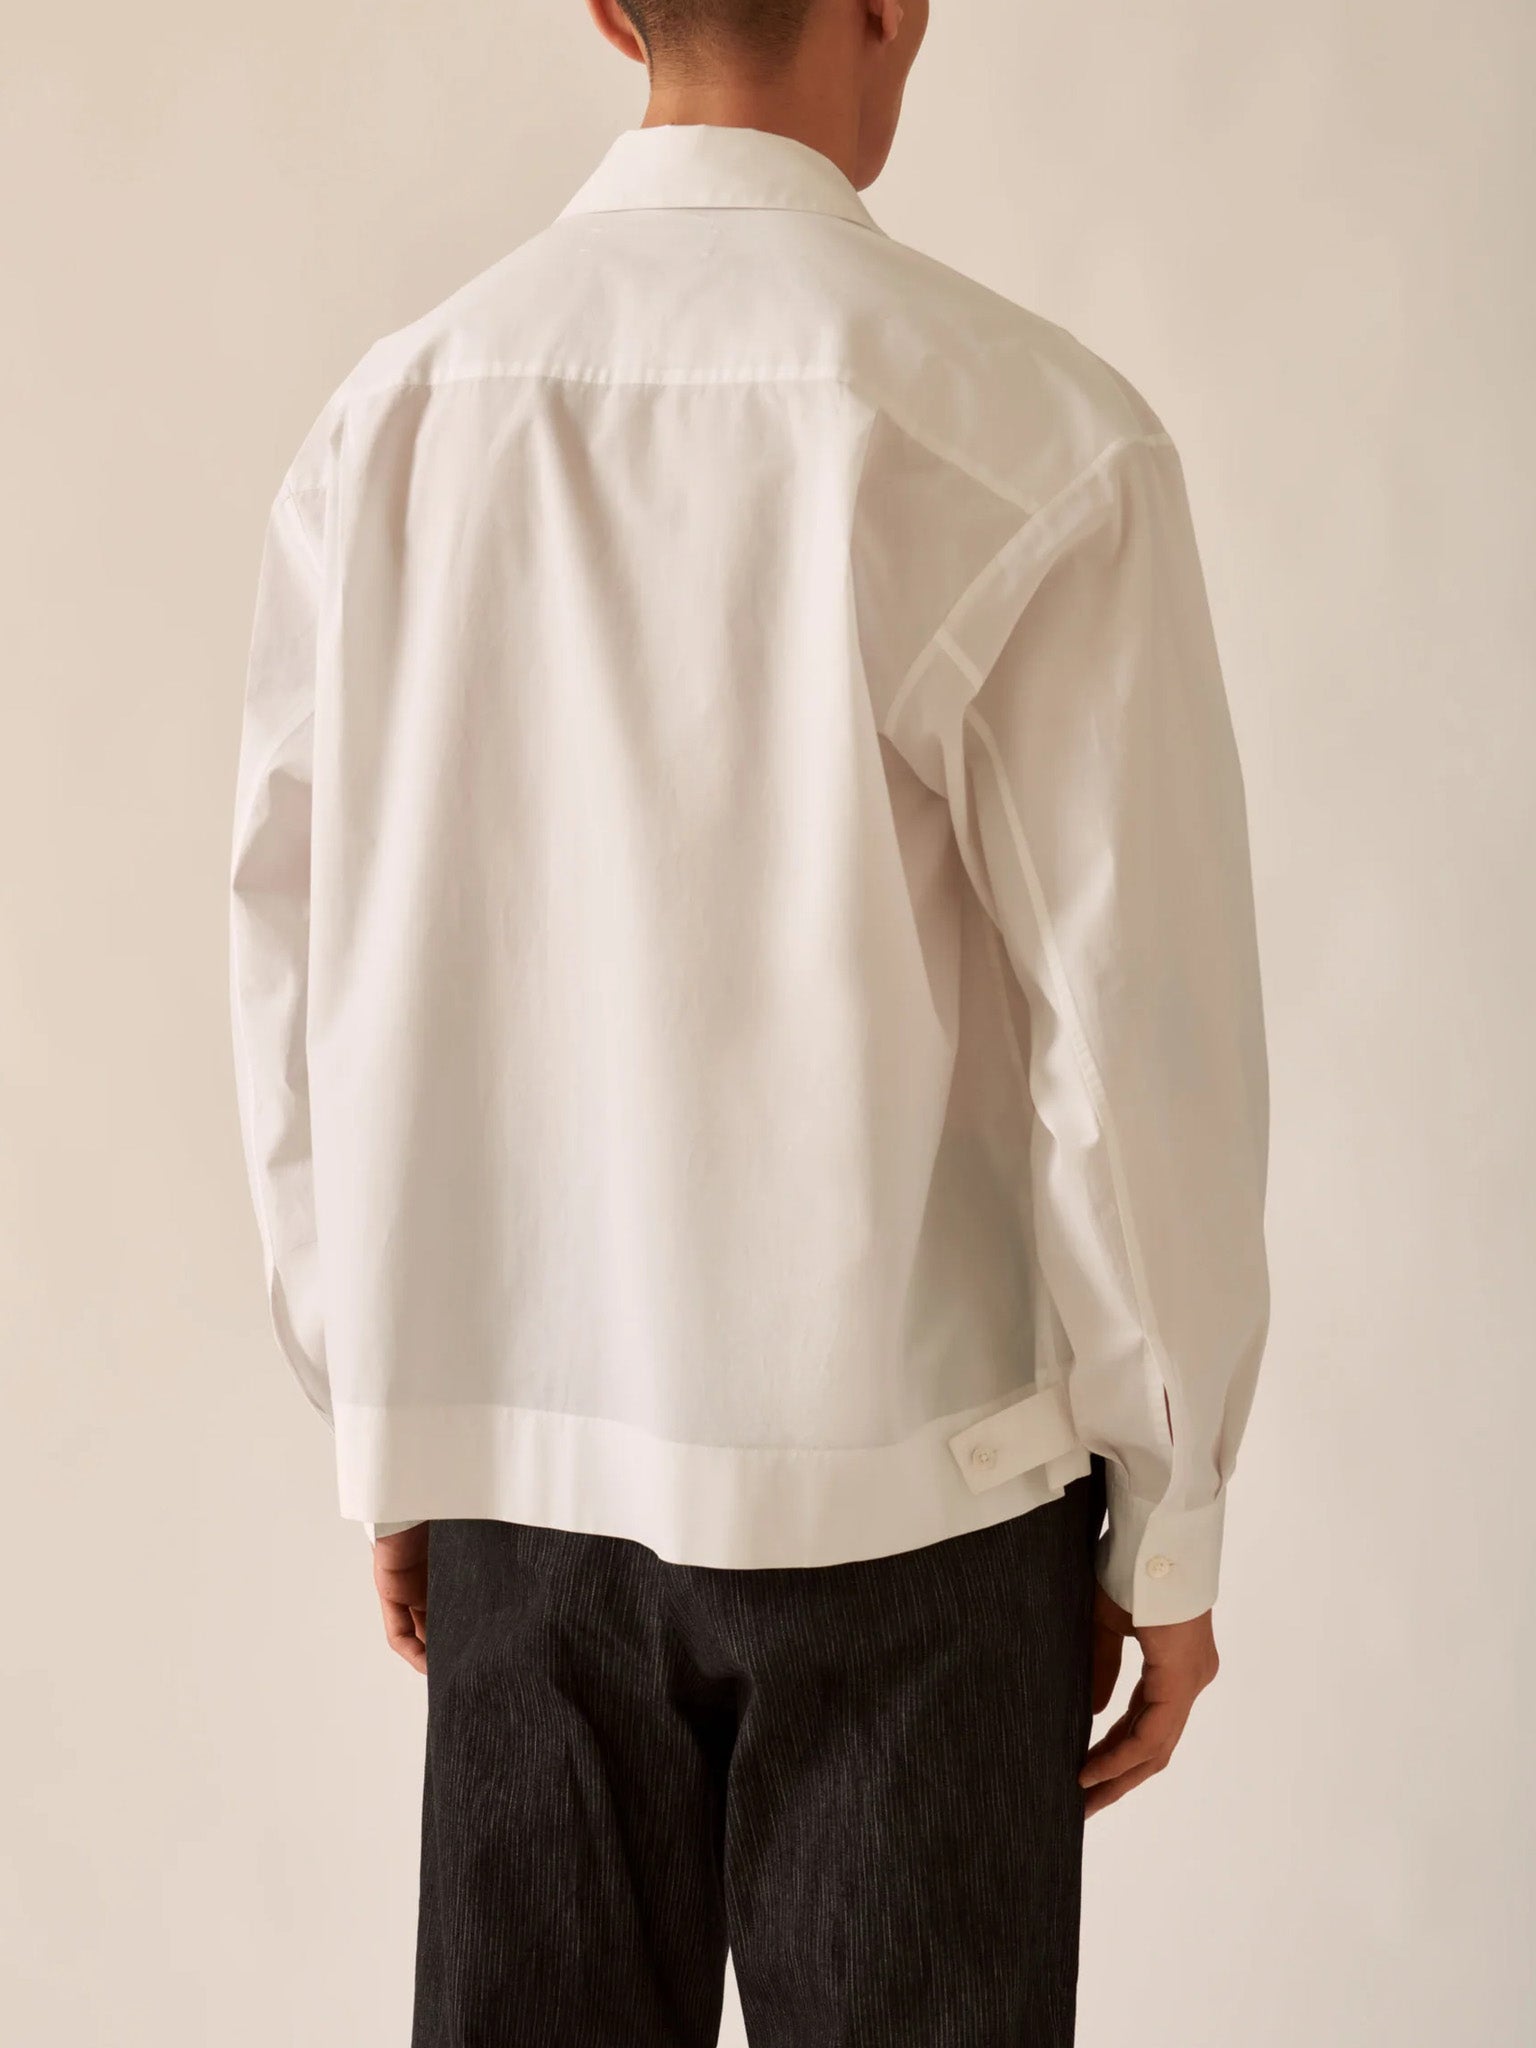 Namu Shop - Jan Machenhauer Frank Shirt - Indigo Cotton Poplin